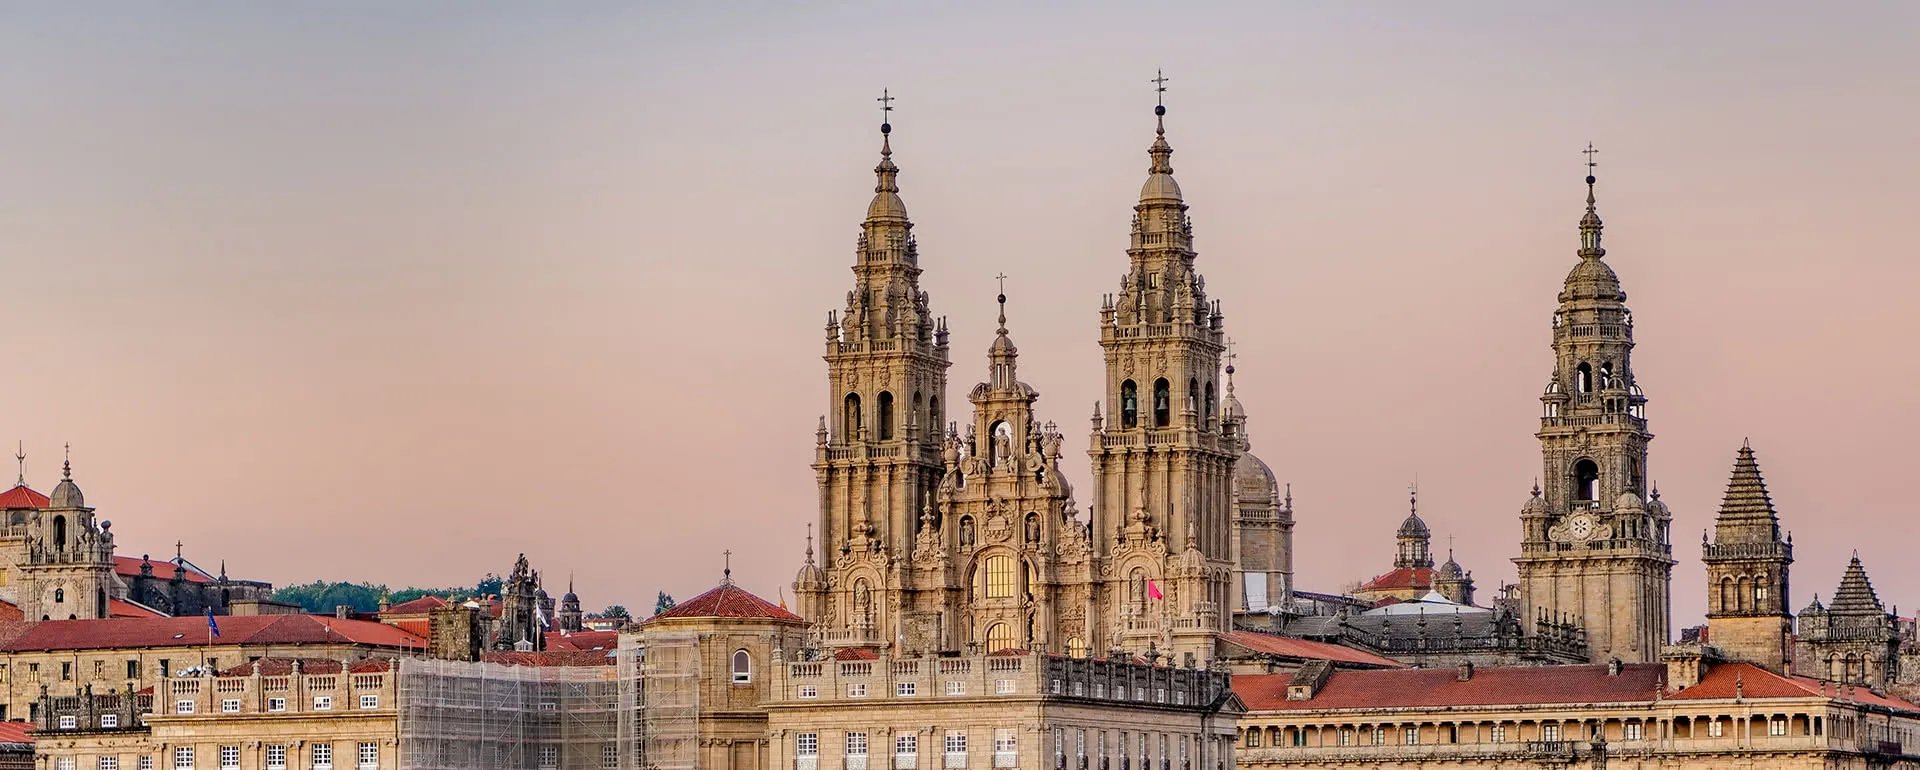 Santiago de Compostela - das Reiseziel mit Jugendherbergen